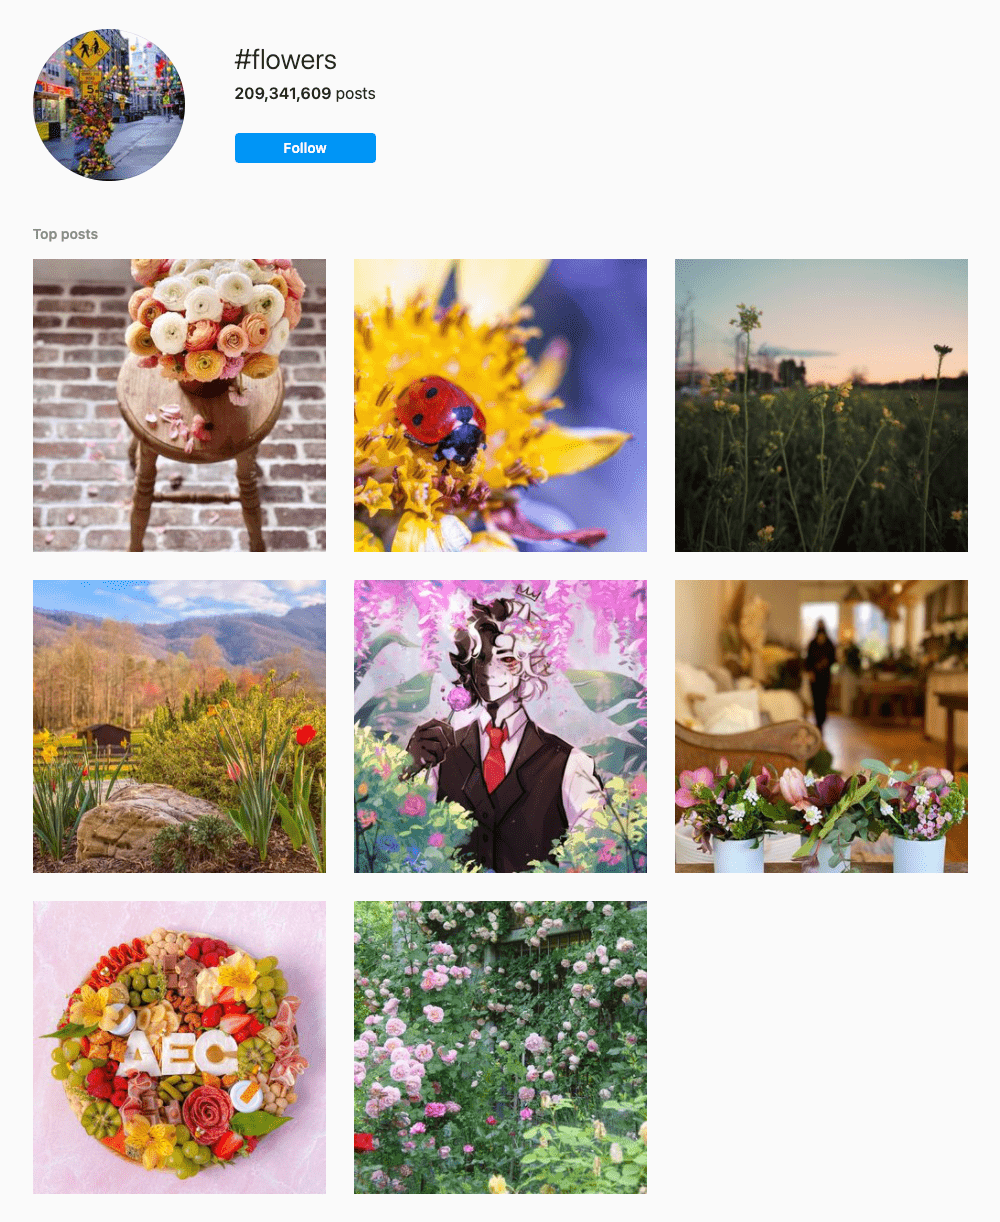 #flowers Hashtags for Instagram